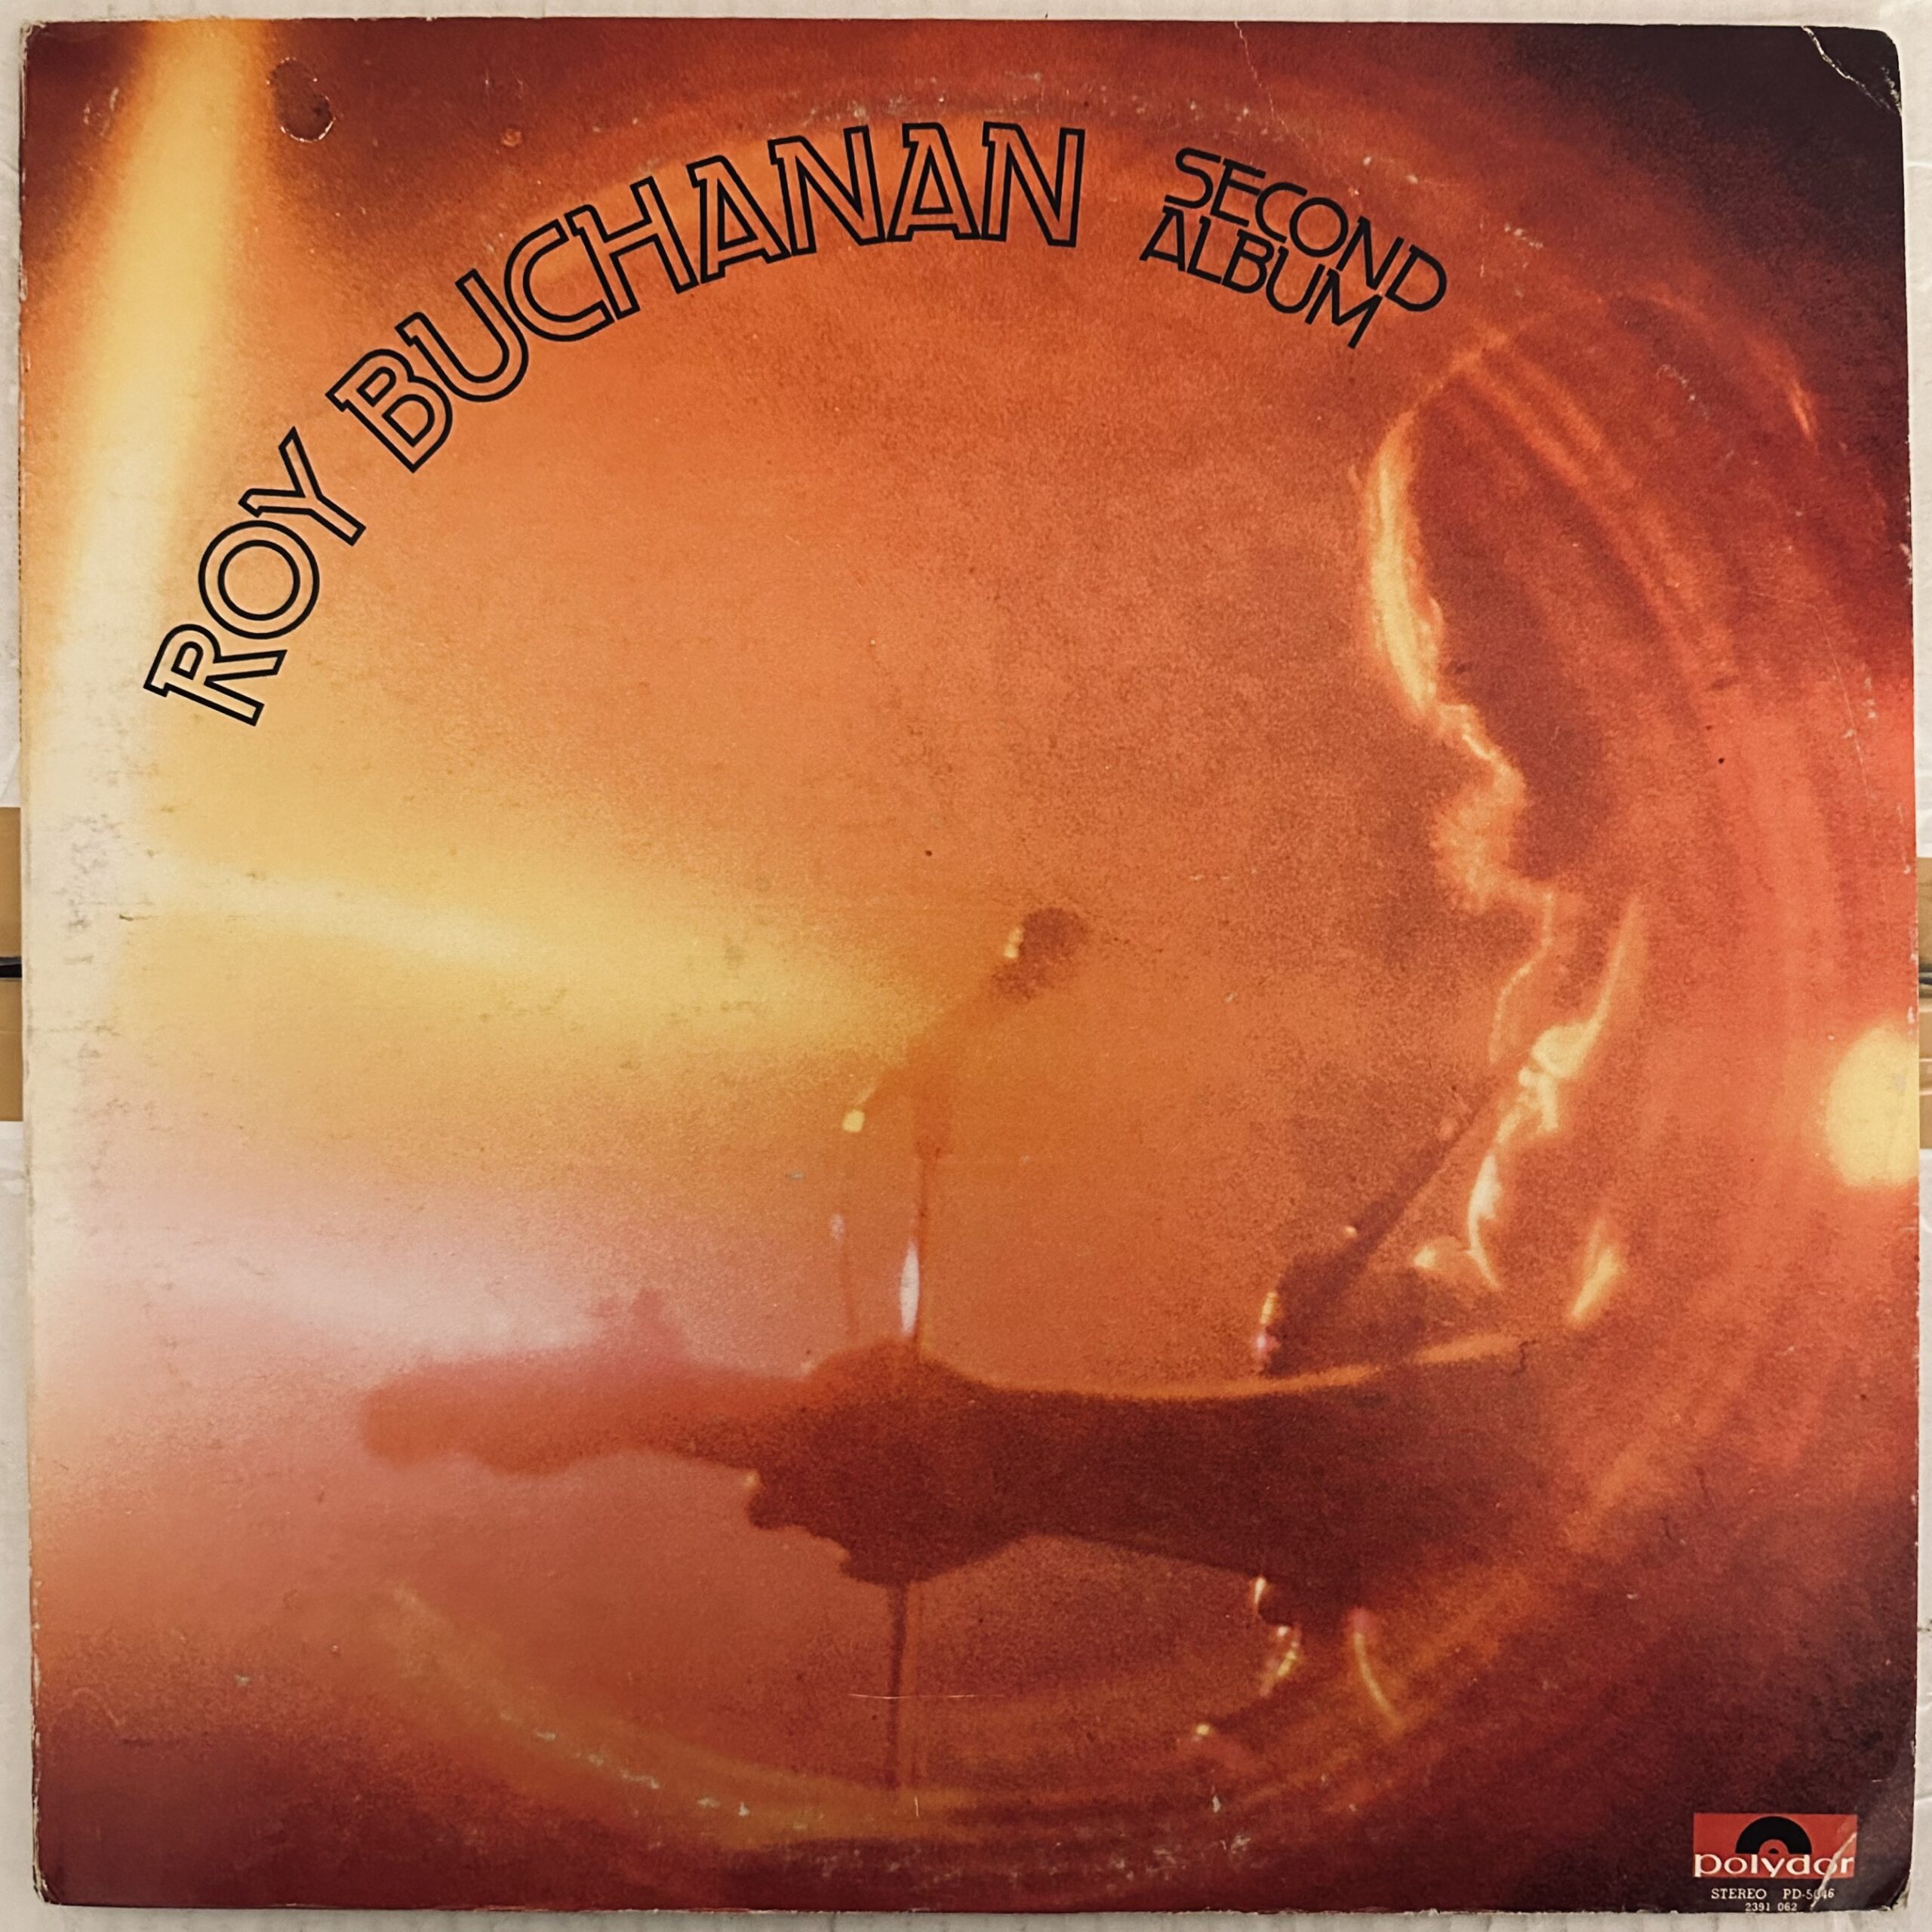 Second Album by Roy Buchanan